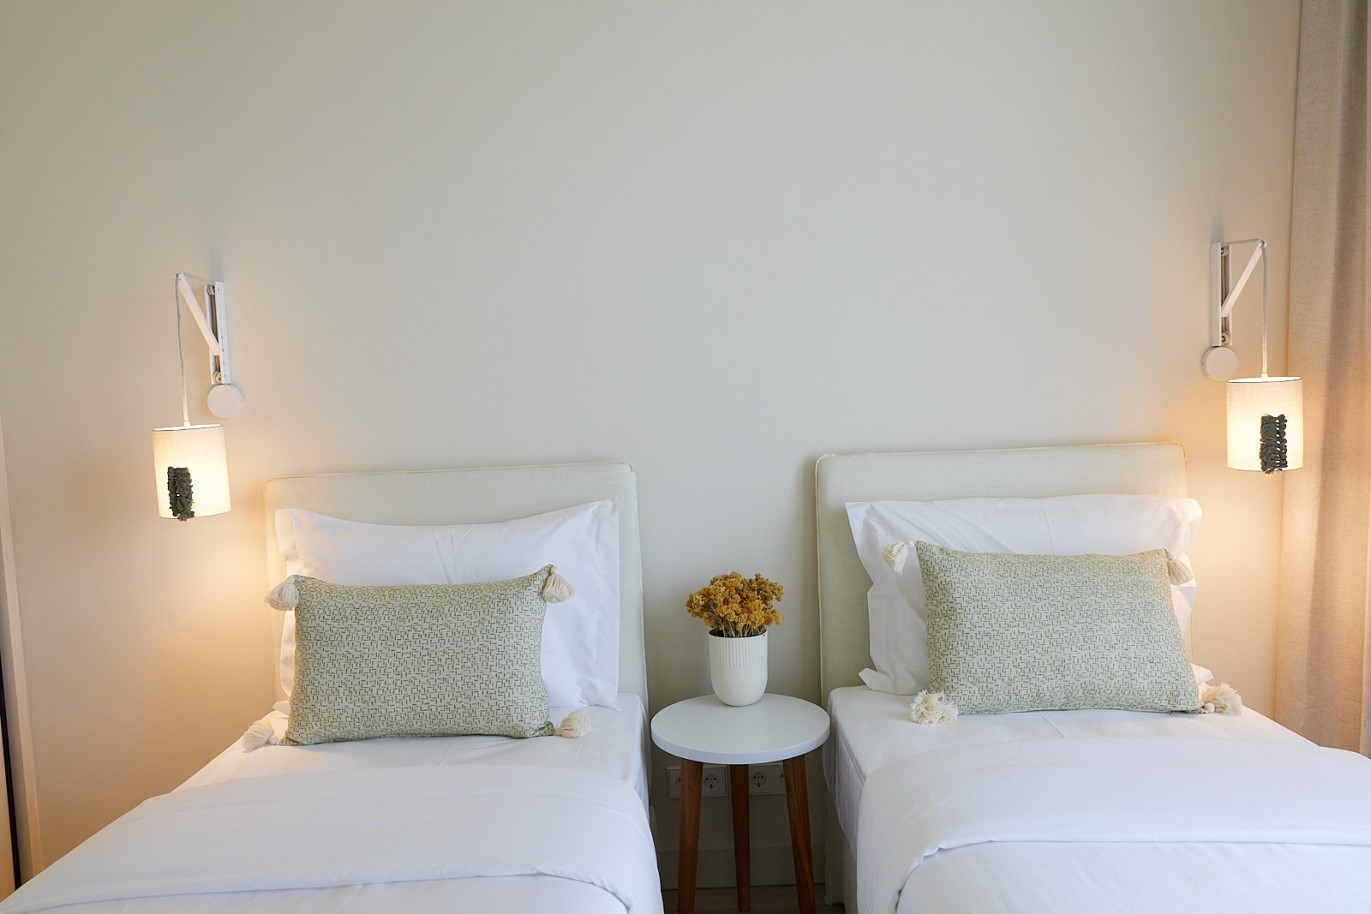 3 bedroom apartment in resort, for sale in Porches, Algarve_230744